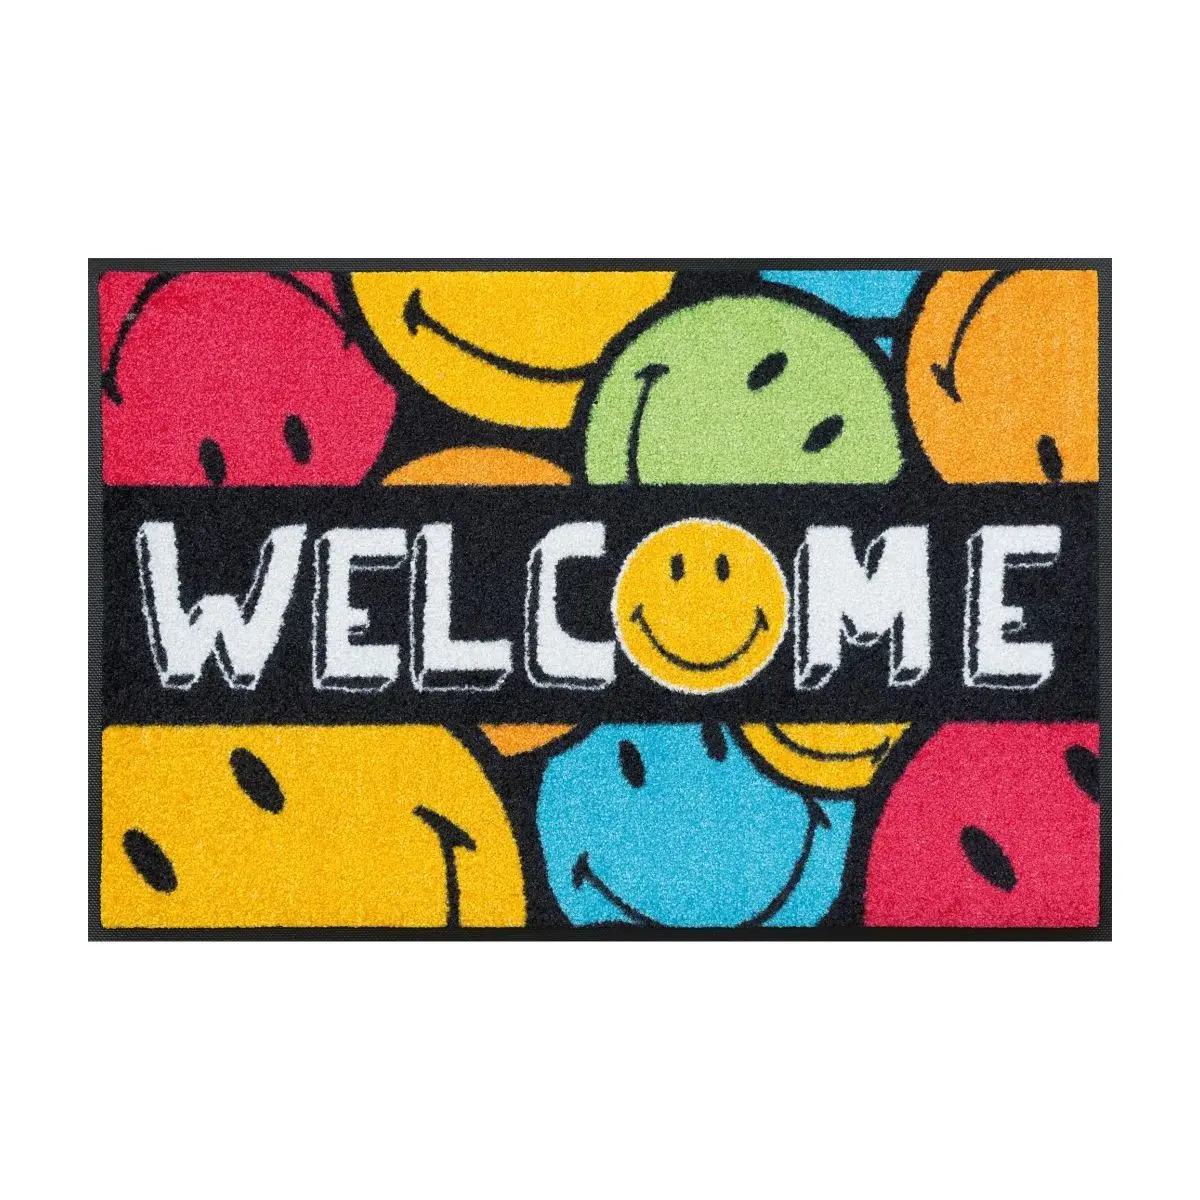 Komfortná podložka Welcome Smileys - 75 x 50 cm